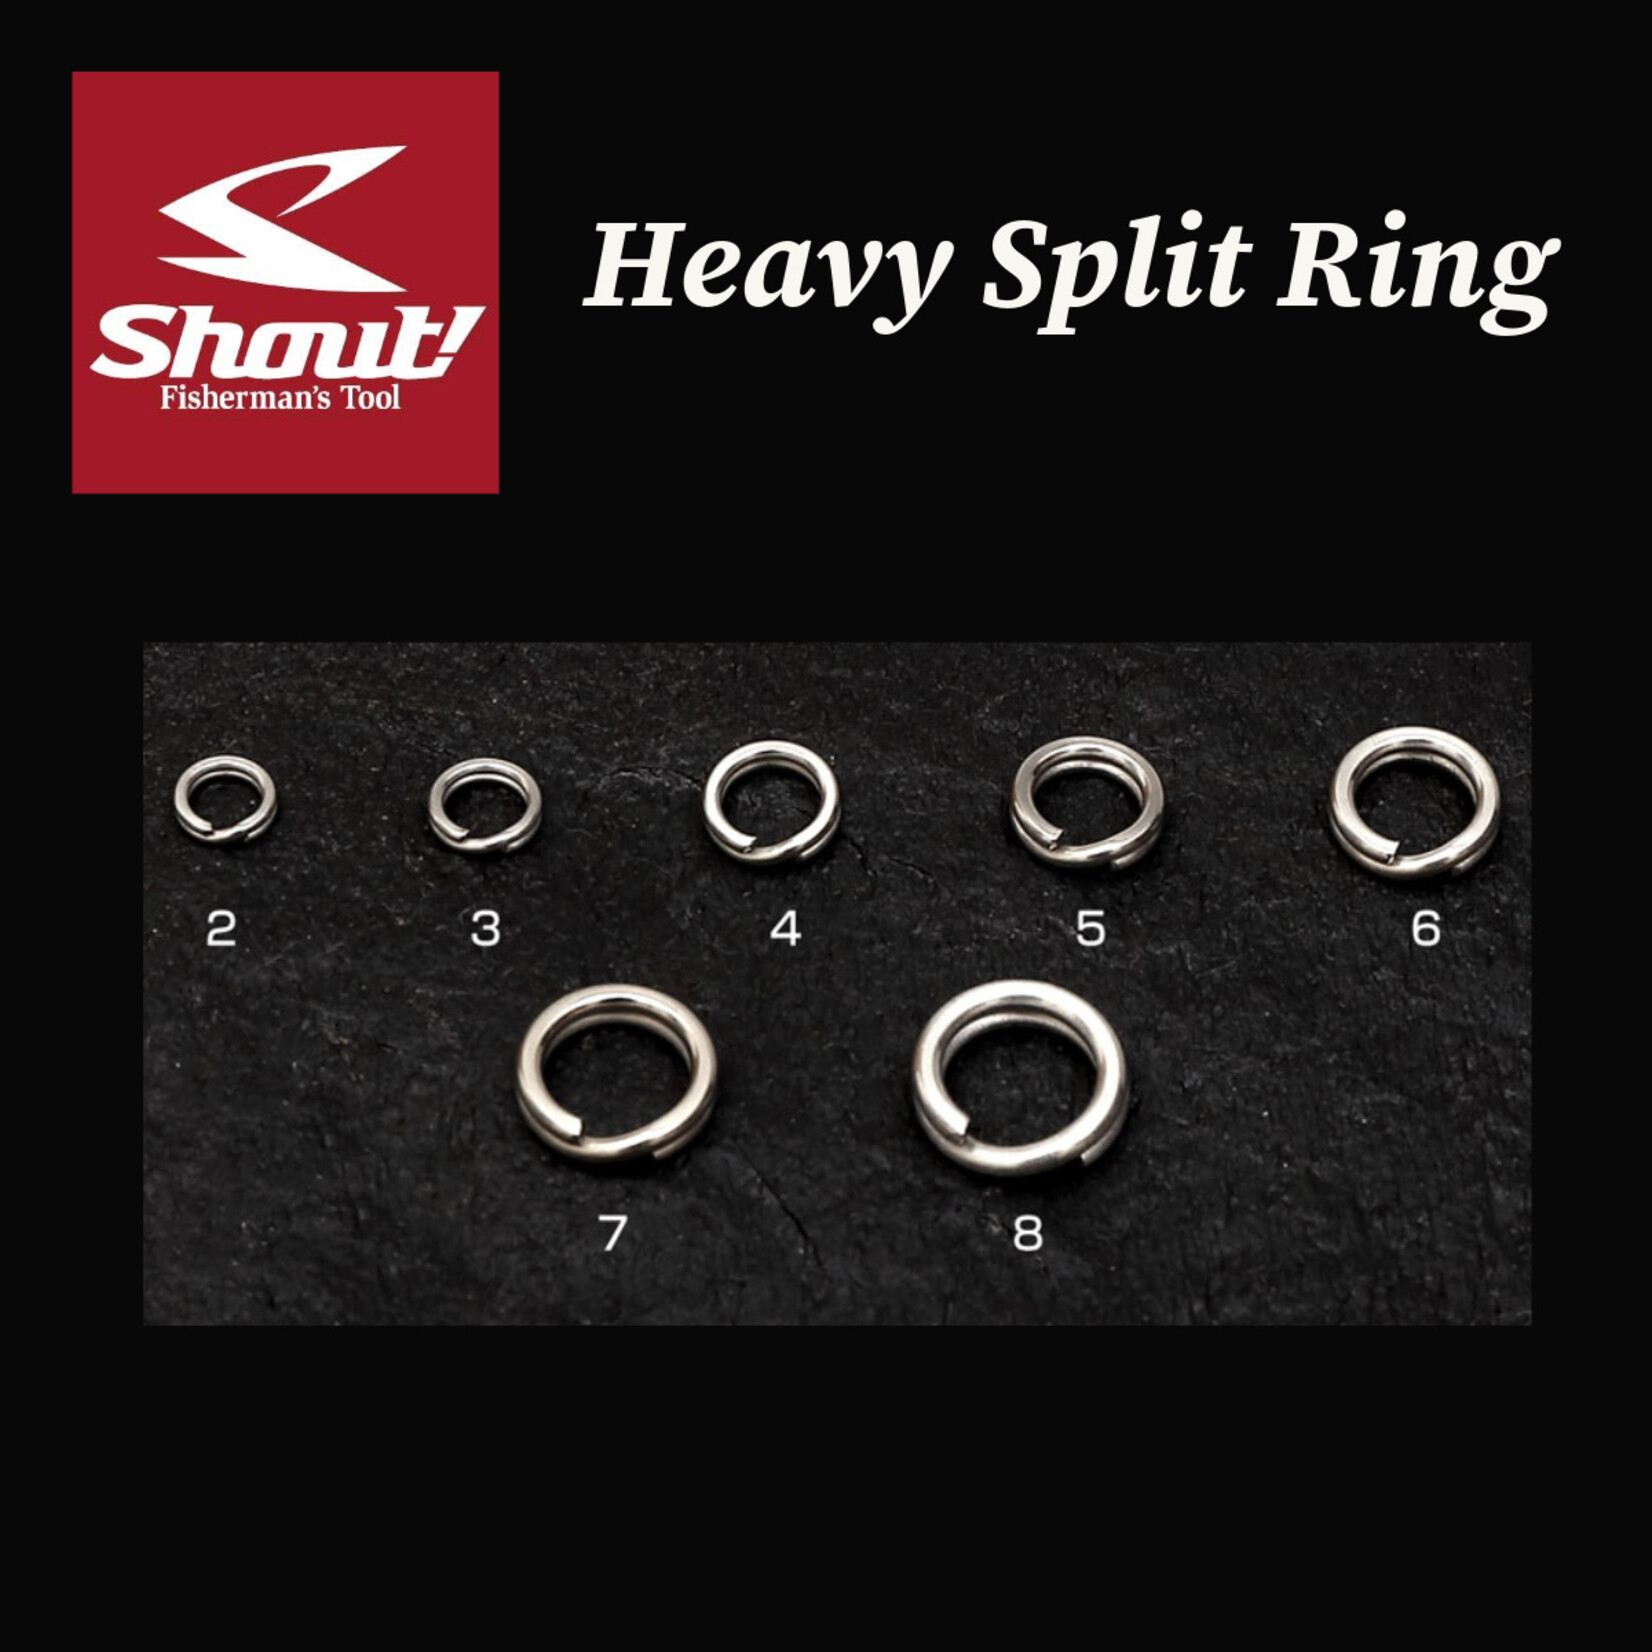 Shout! Heavy Split Ring 411H